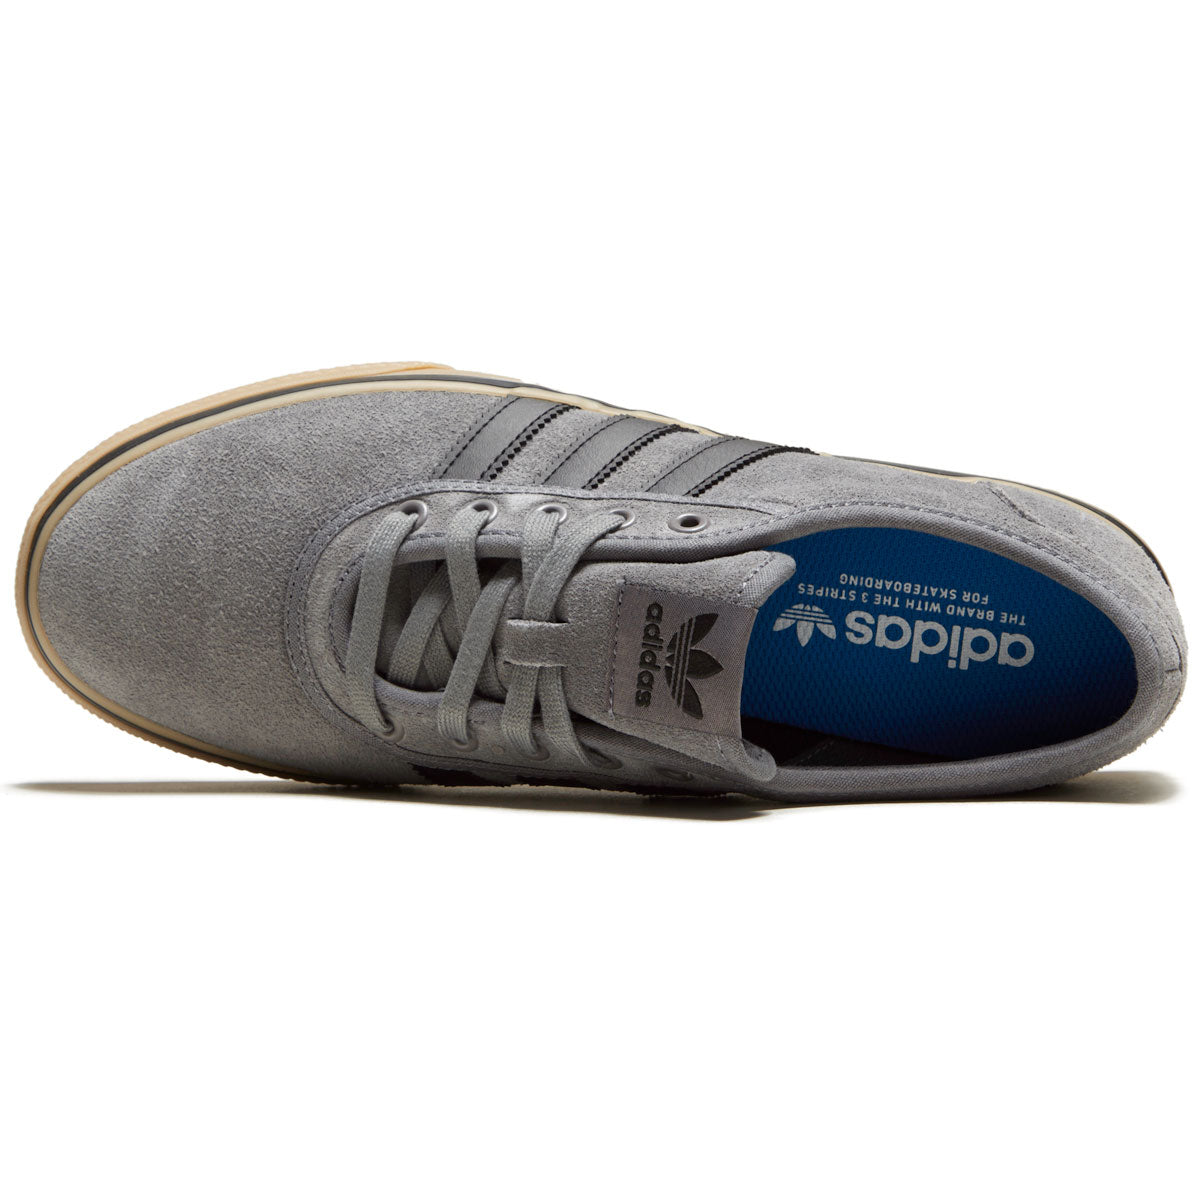 Adidas Adi Ease Shoes - Grey/Core Black/Gum – CCS